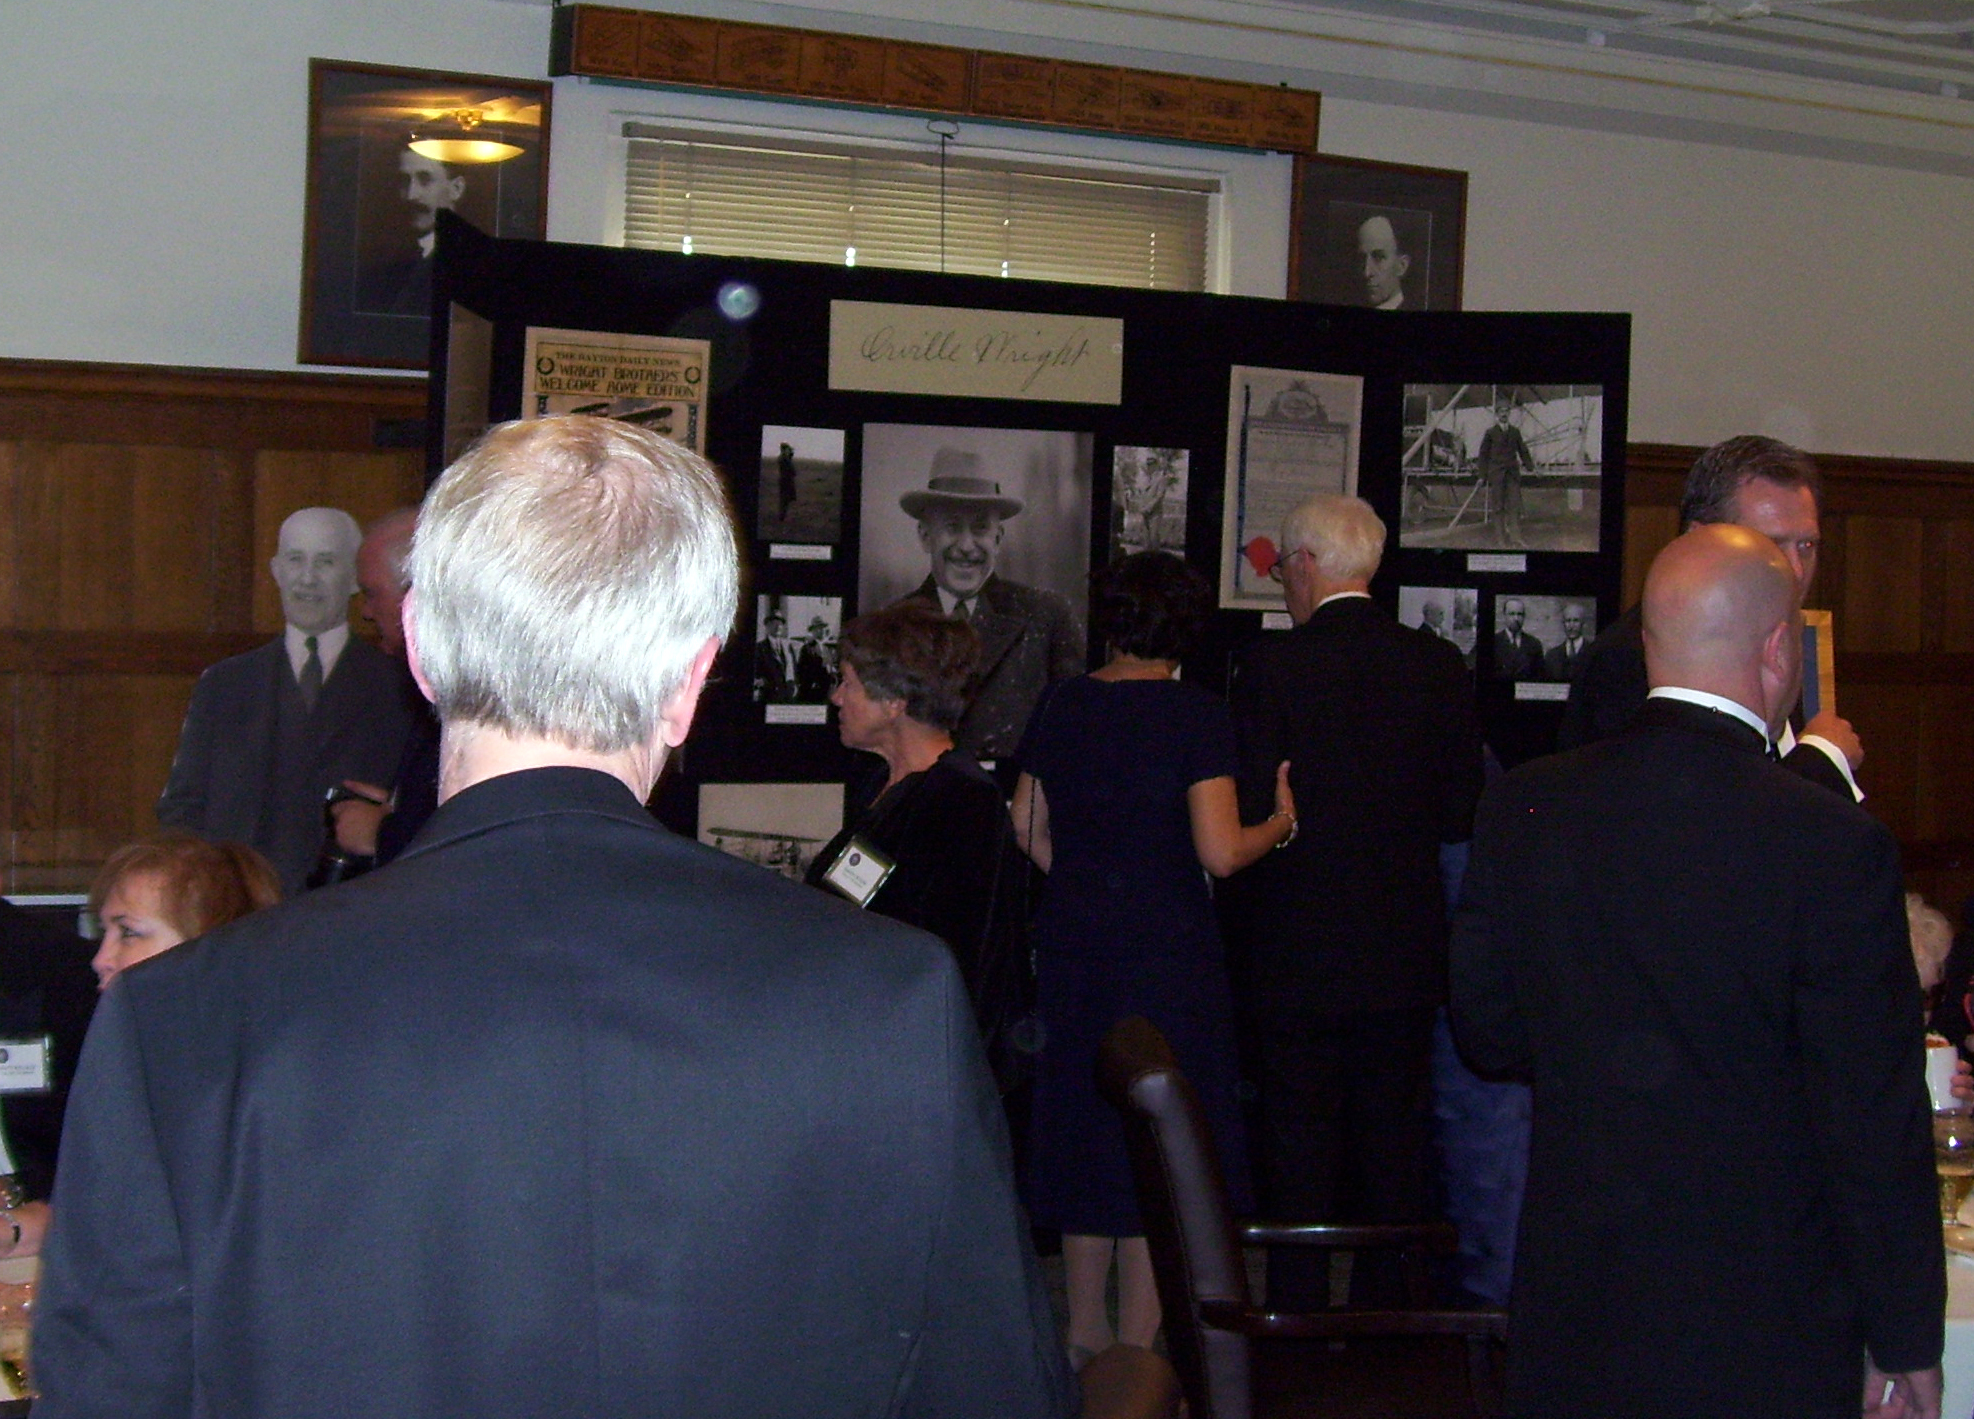 Attendees at the centennial celebration enjoying the exhibit, April 26, 2014